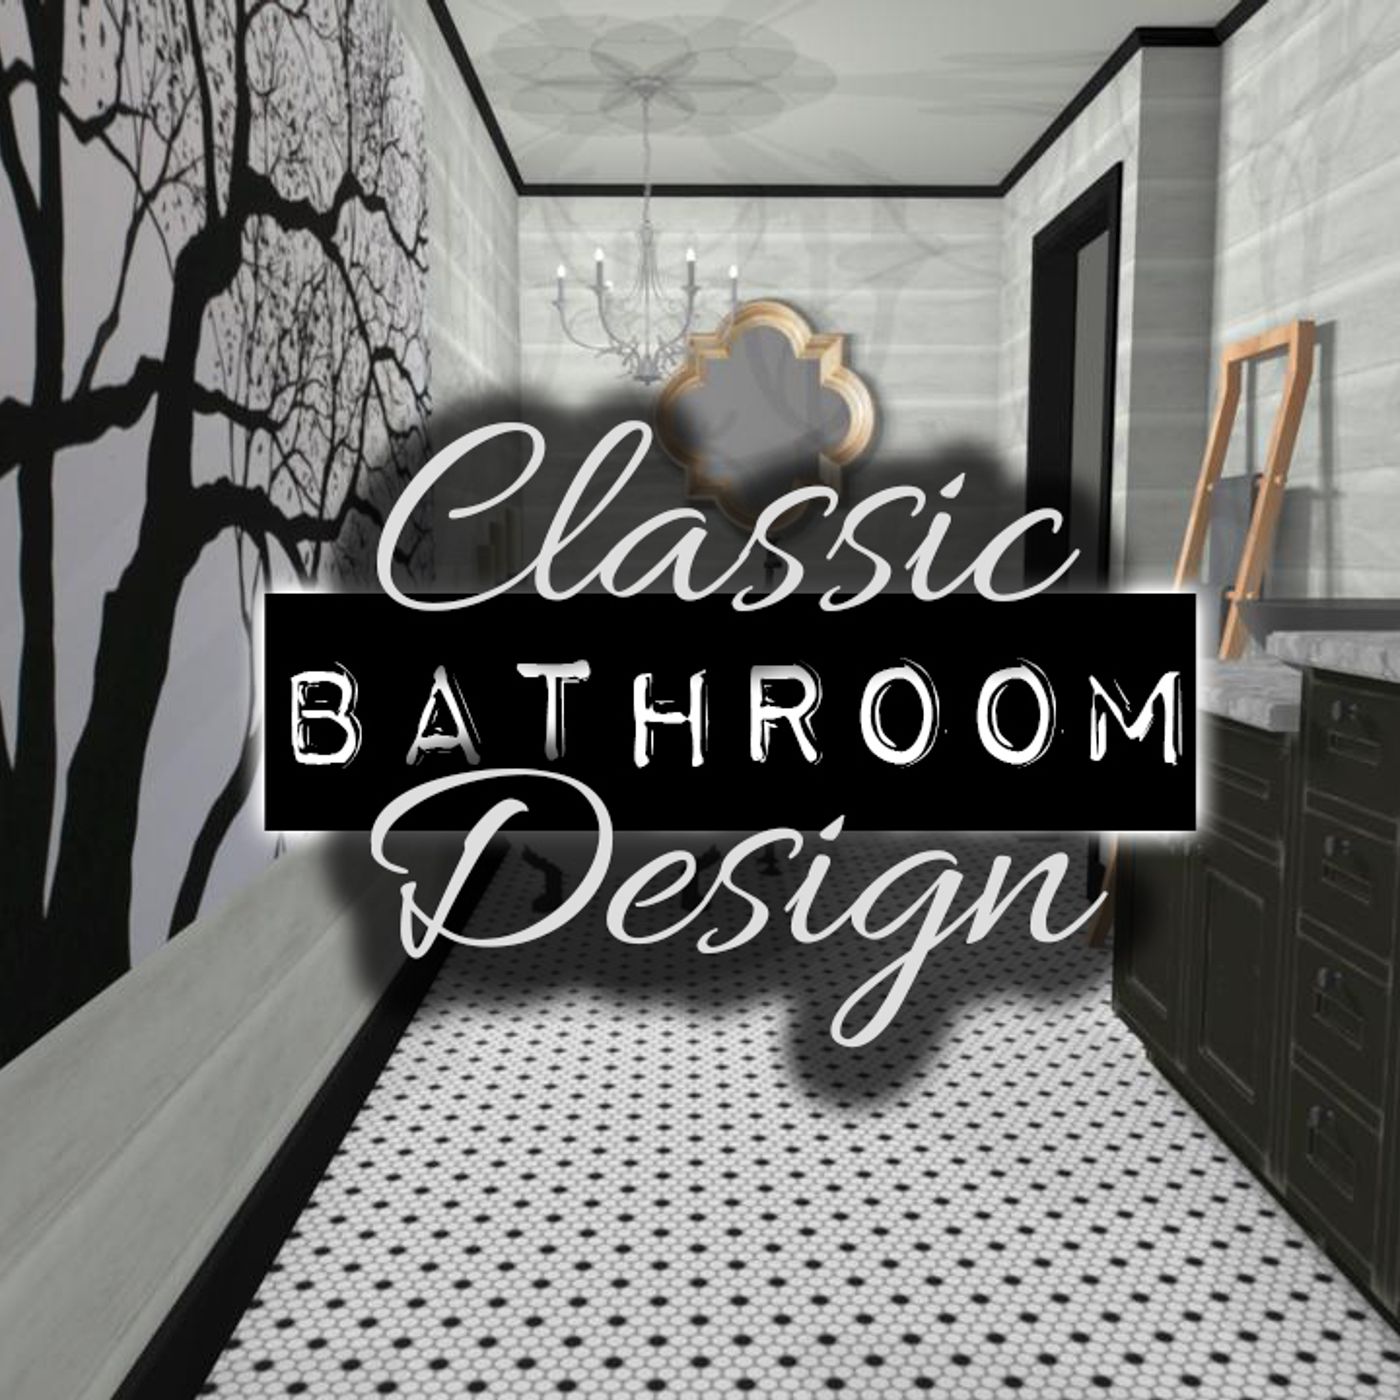 Classic Bathroom Design Ideas | DIY & Home Design